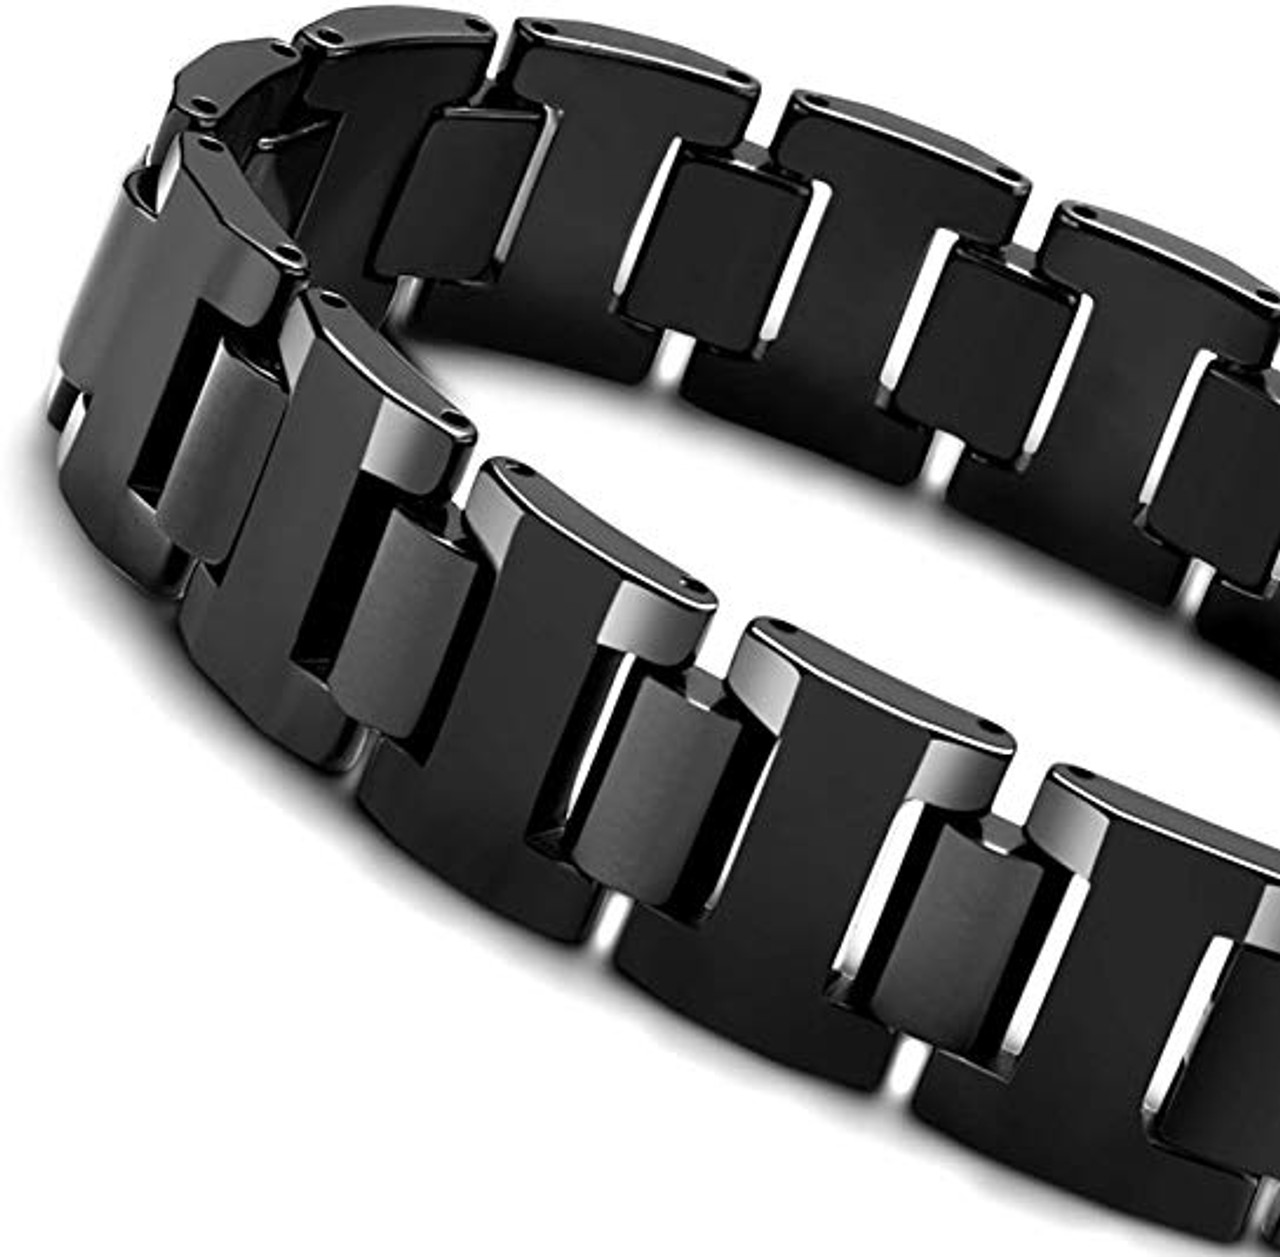 8.0" Inch Length - Mens Tungsten Carbide Bracelet - Solid All Black Tungsten Men's Link Bracelet 